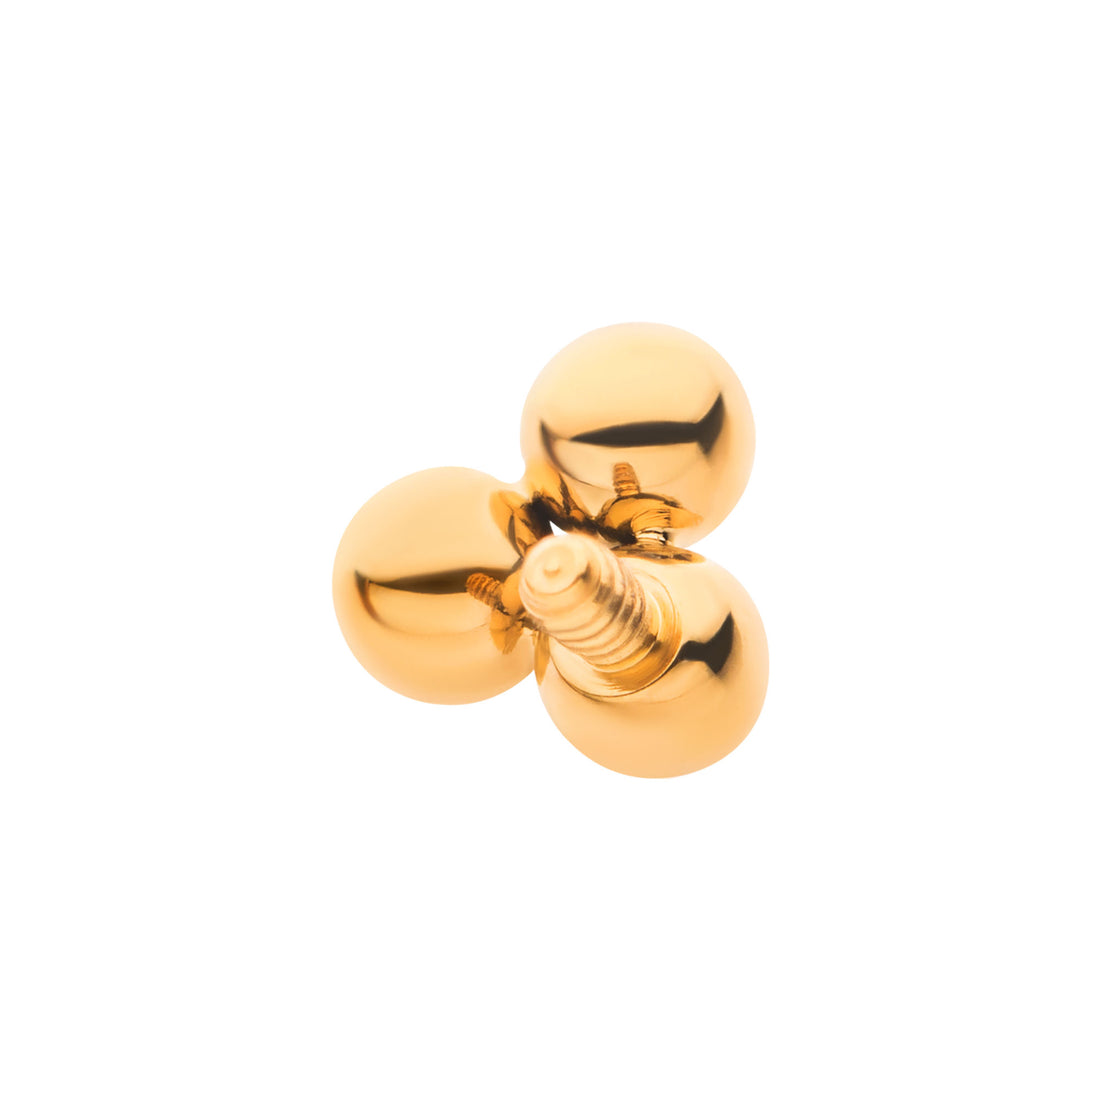 24KT Gold PVD Titanium Internally Threaded with Trinity Ball Top